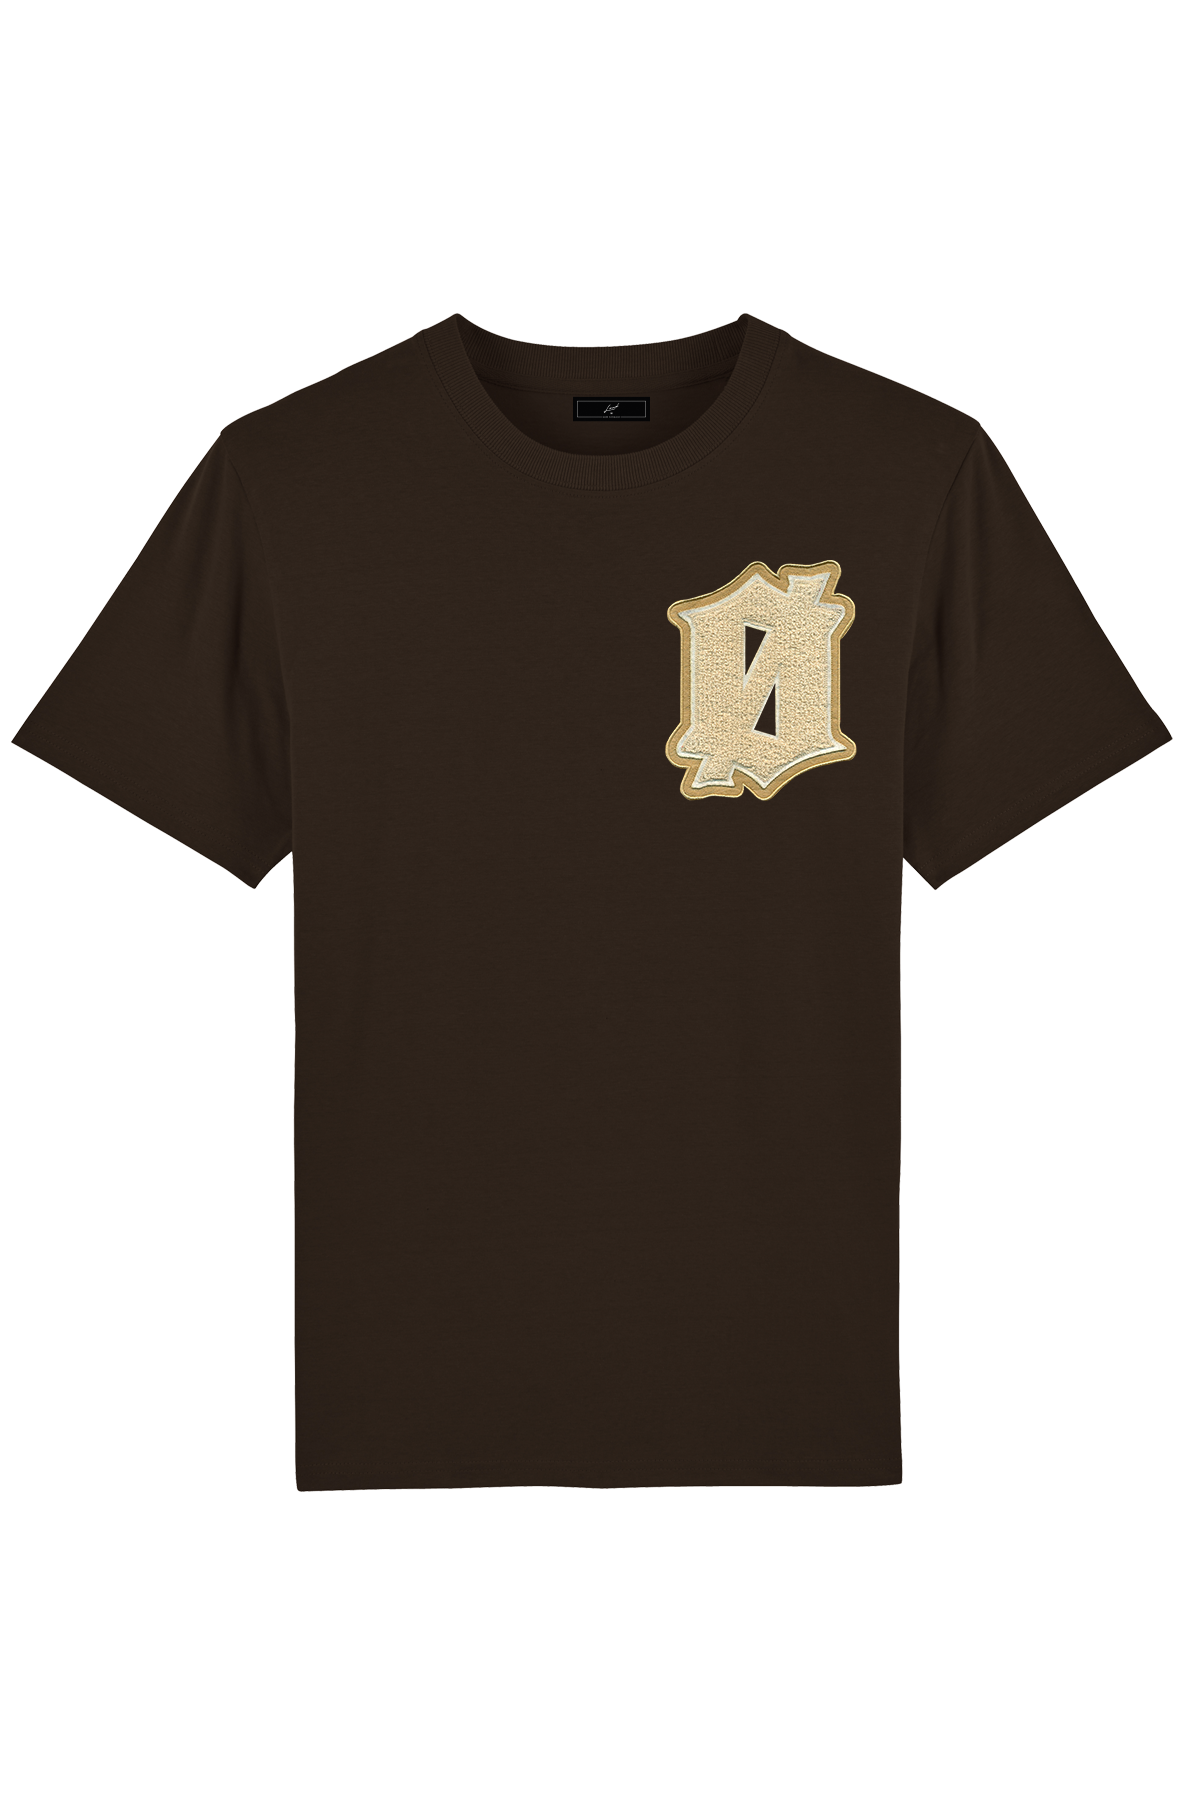 Chenille Logo Brown T-Shirt - Live Look Loud